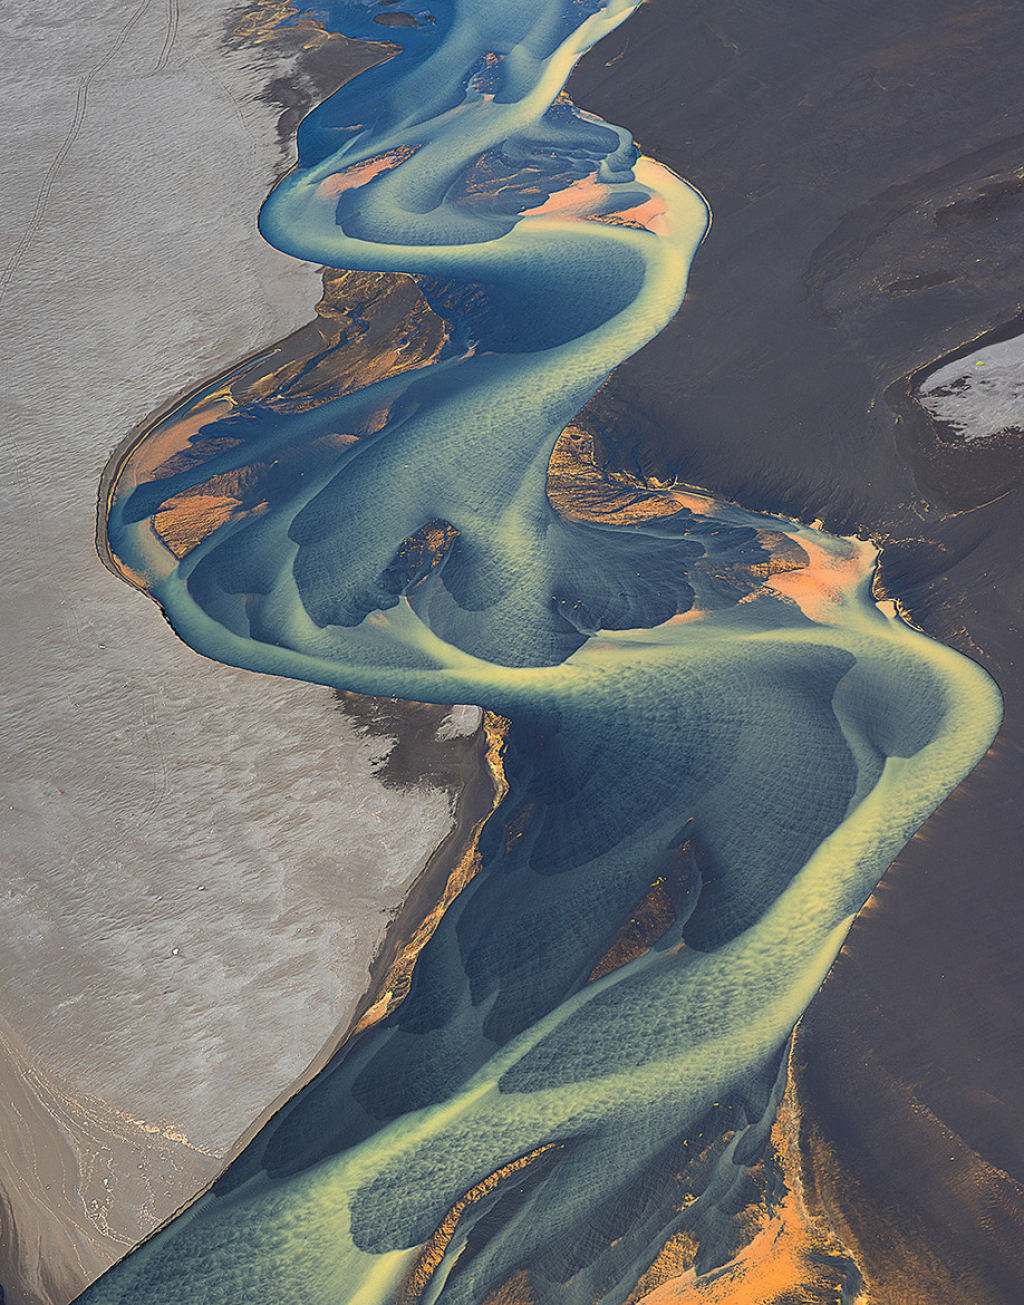 Fotos aéreas espetaculares de rios vulcânicos da Islândia 01